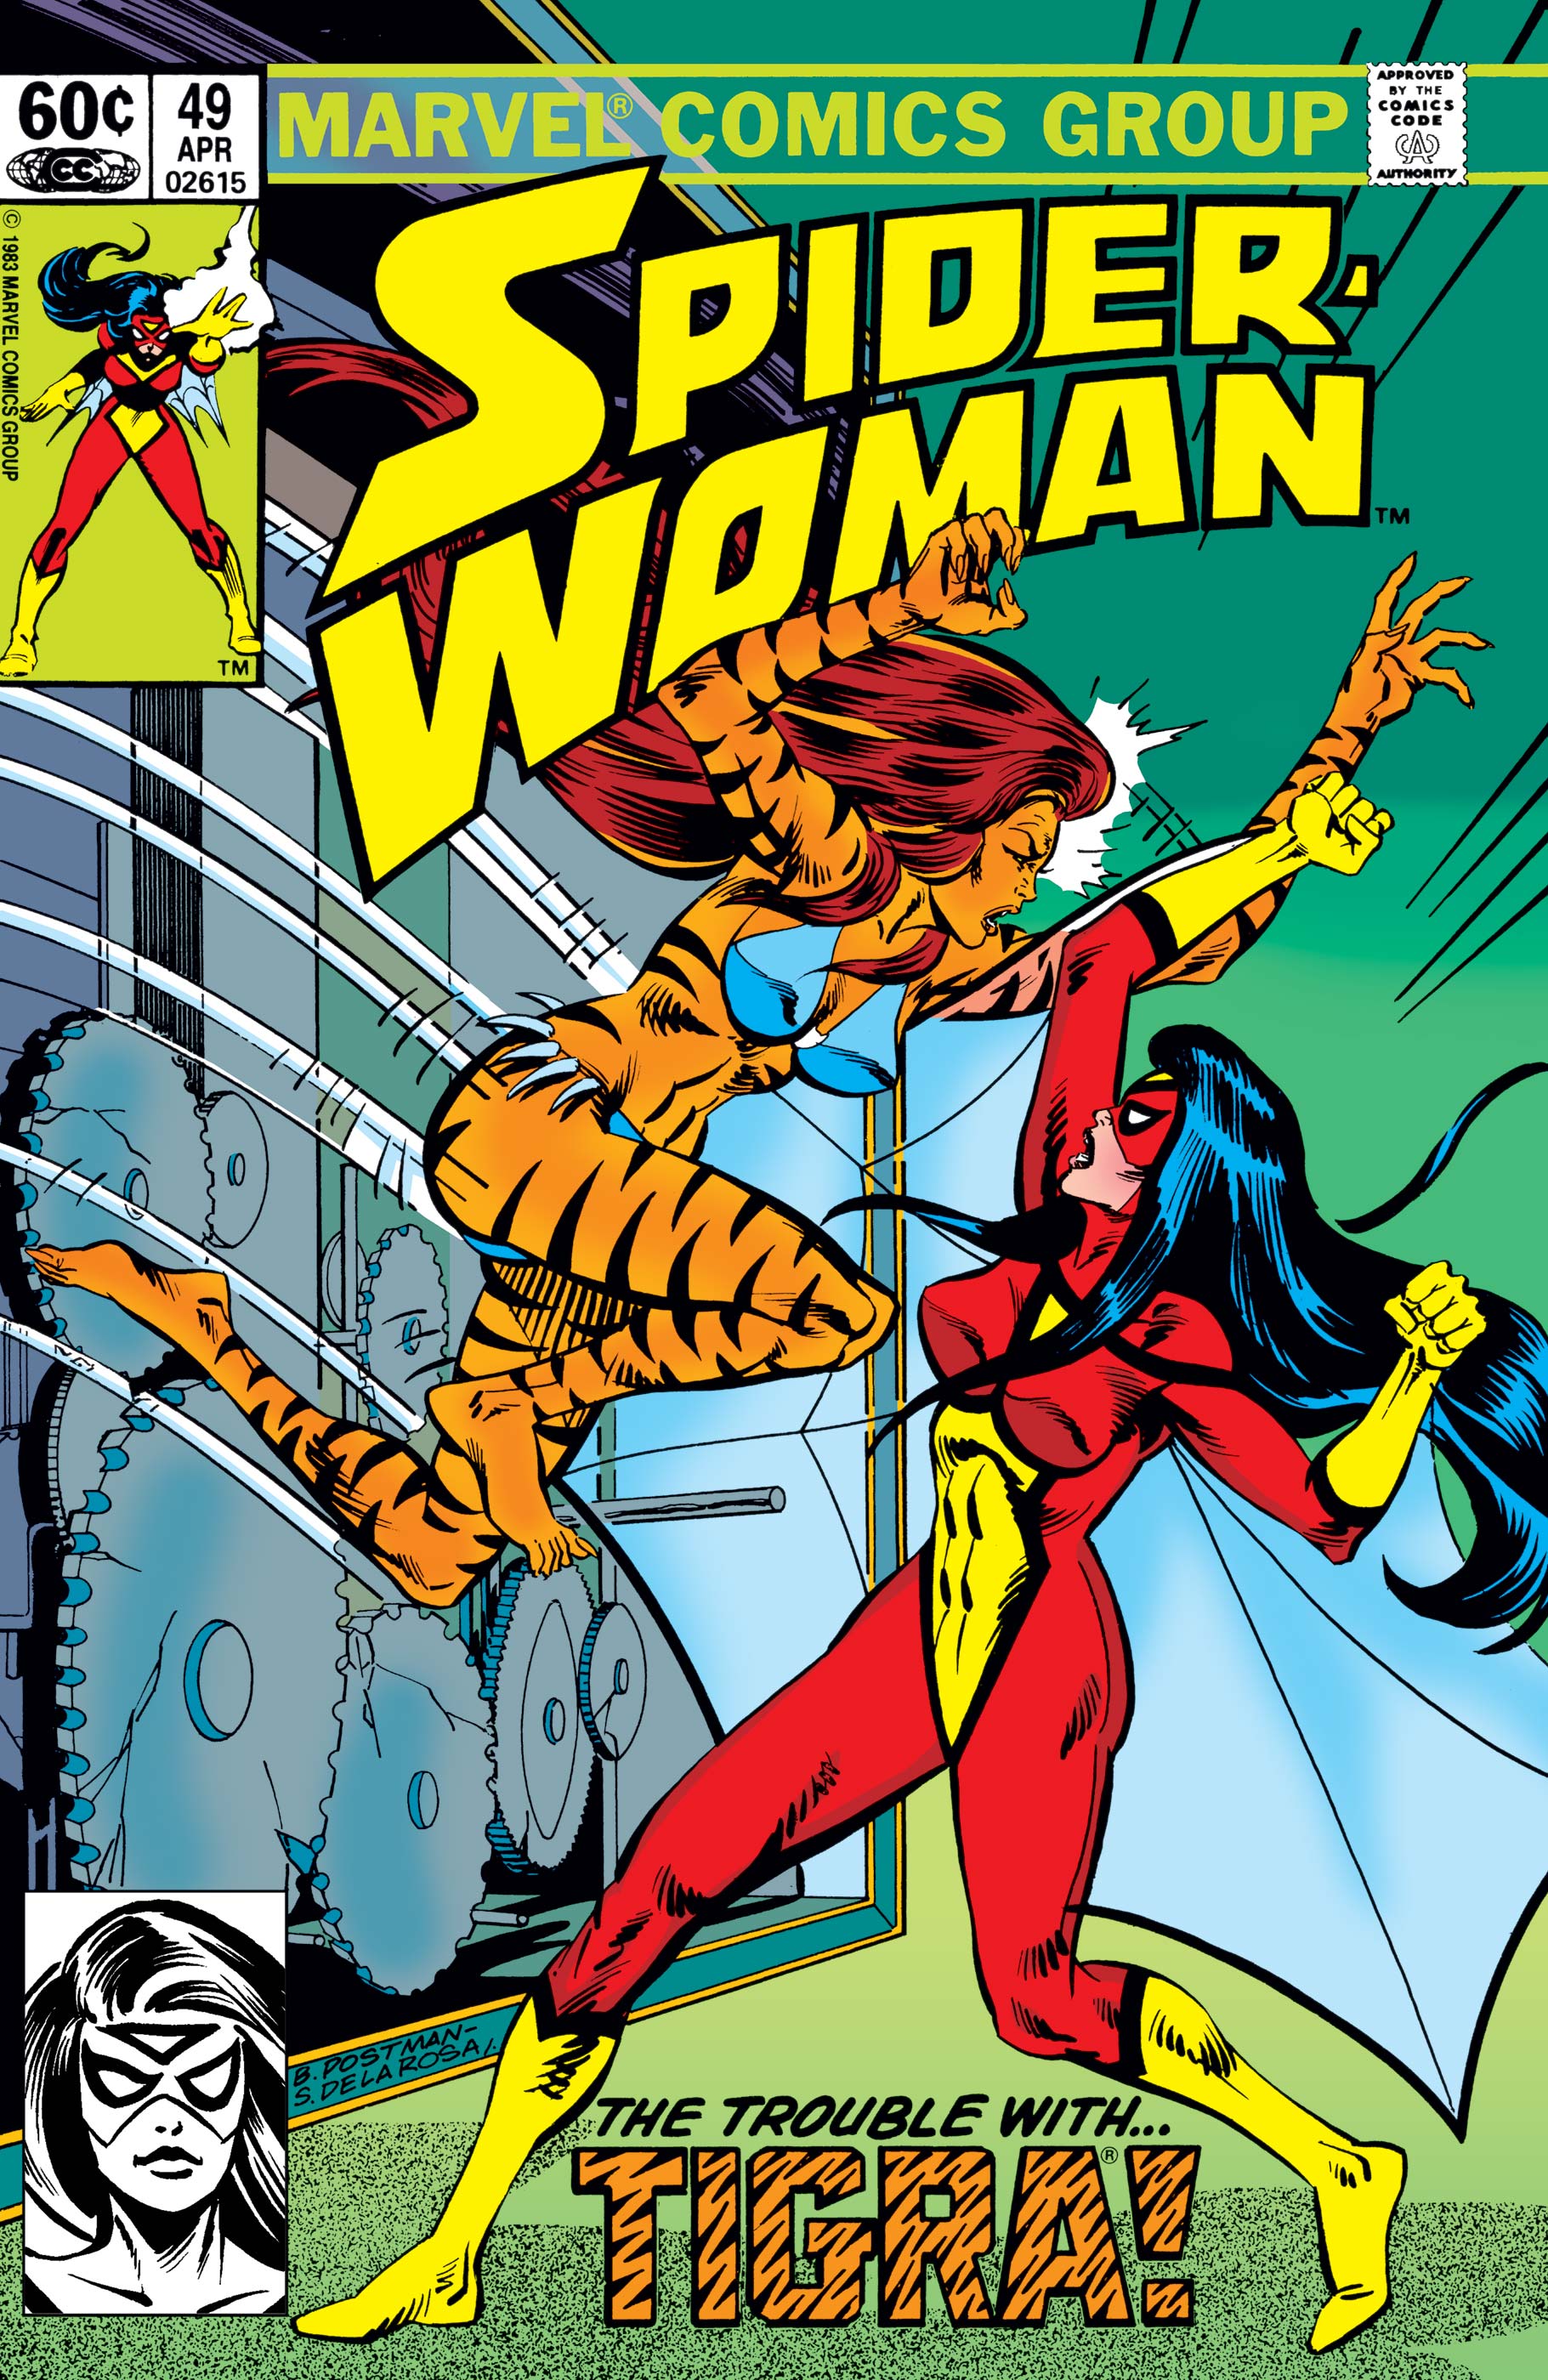 Spider-Woman (1978) #49